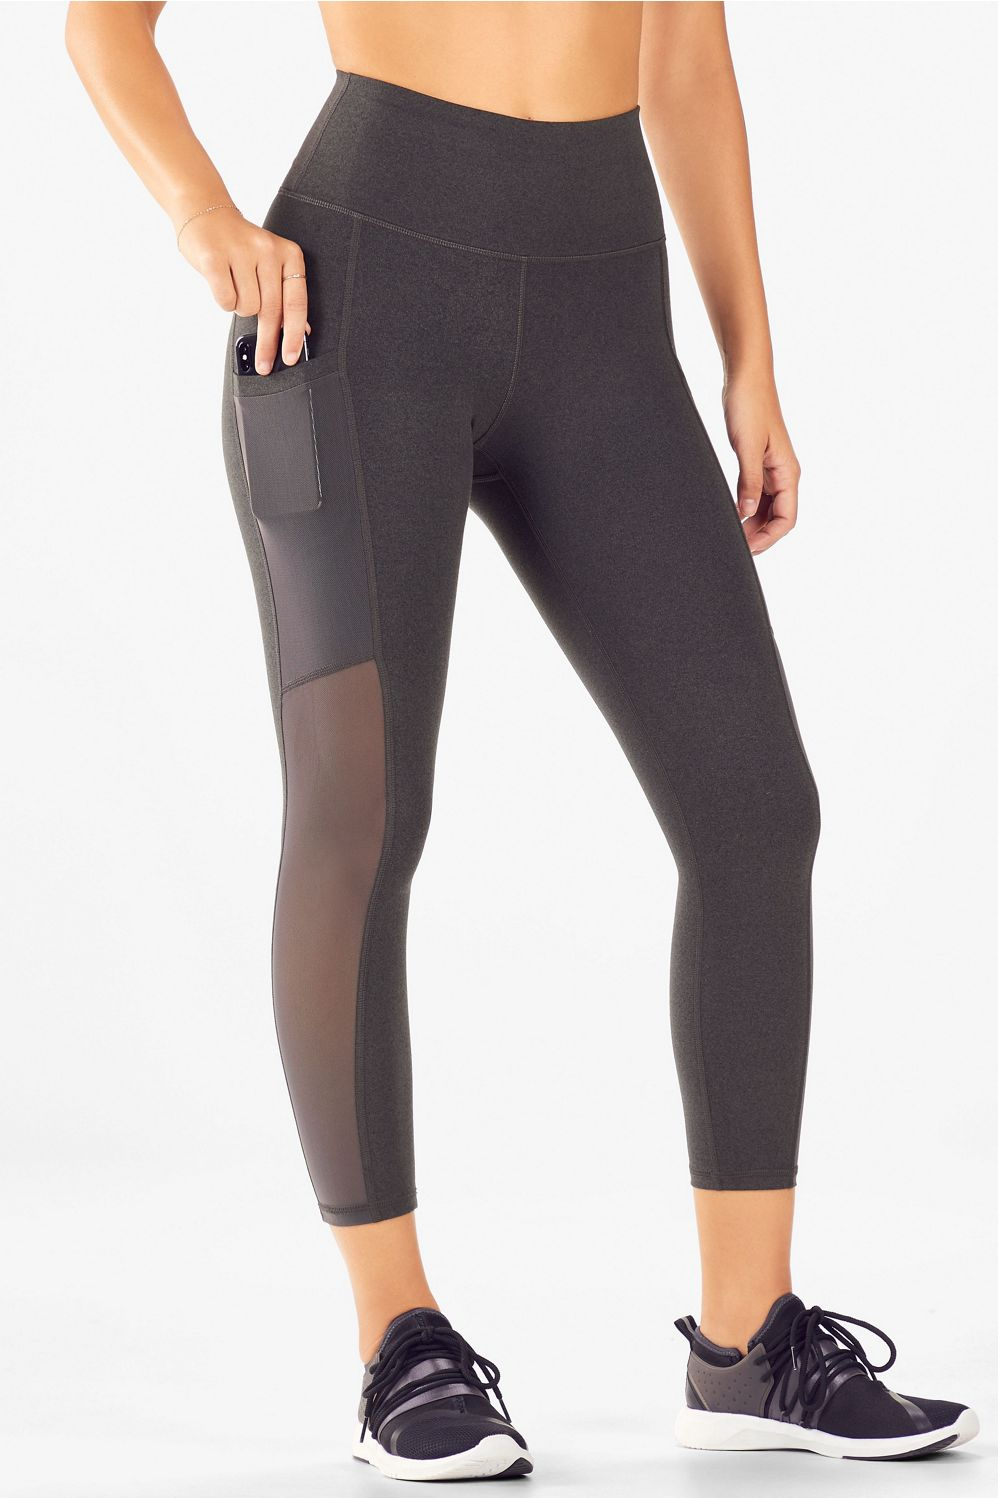 Mila High-Waisted Pocket Capri -   18 fitness Yoga pants ideas